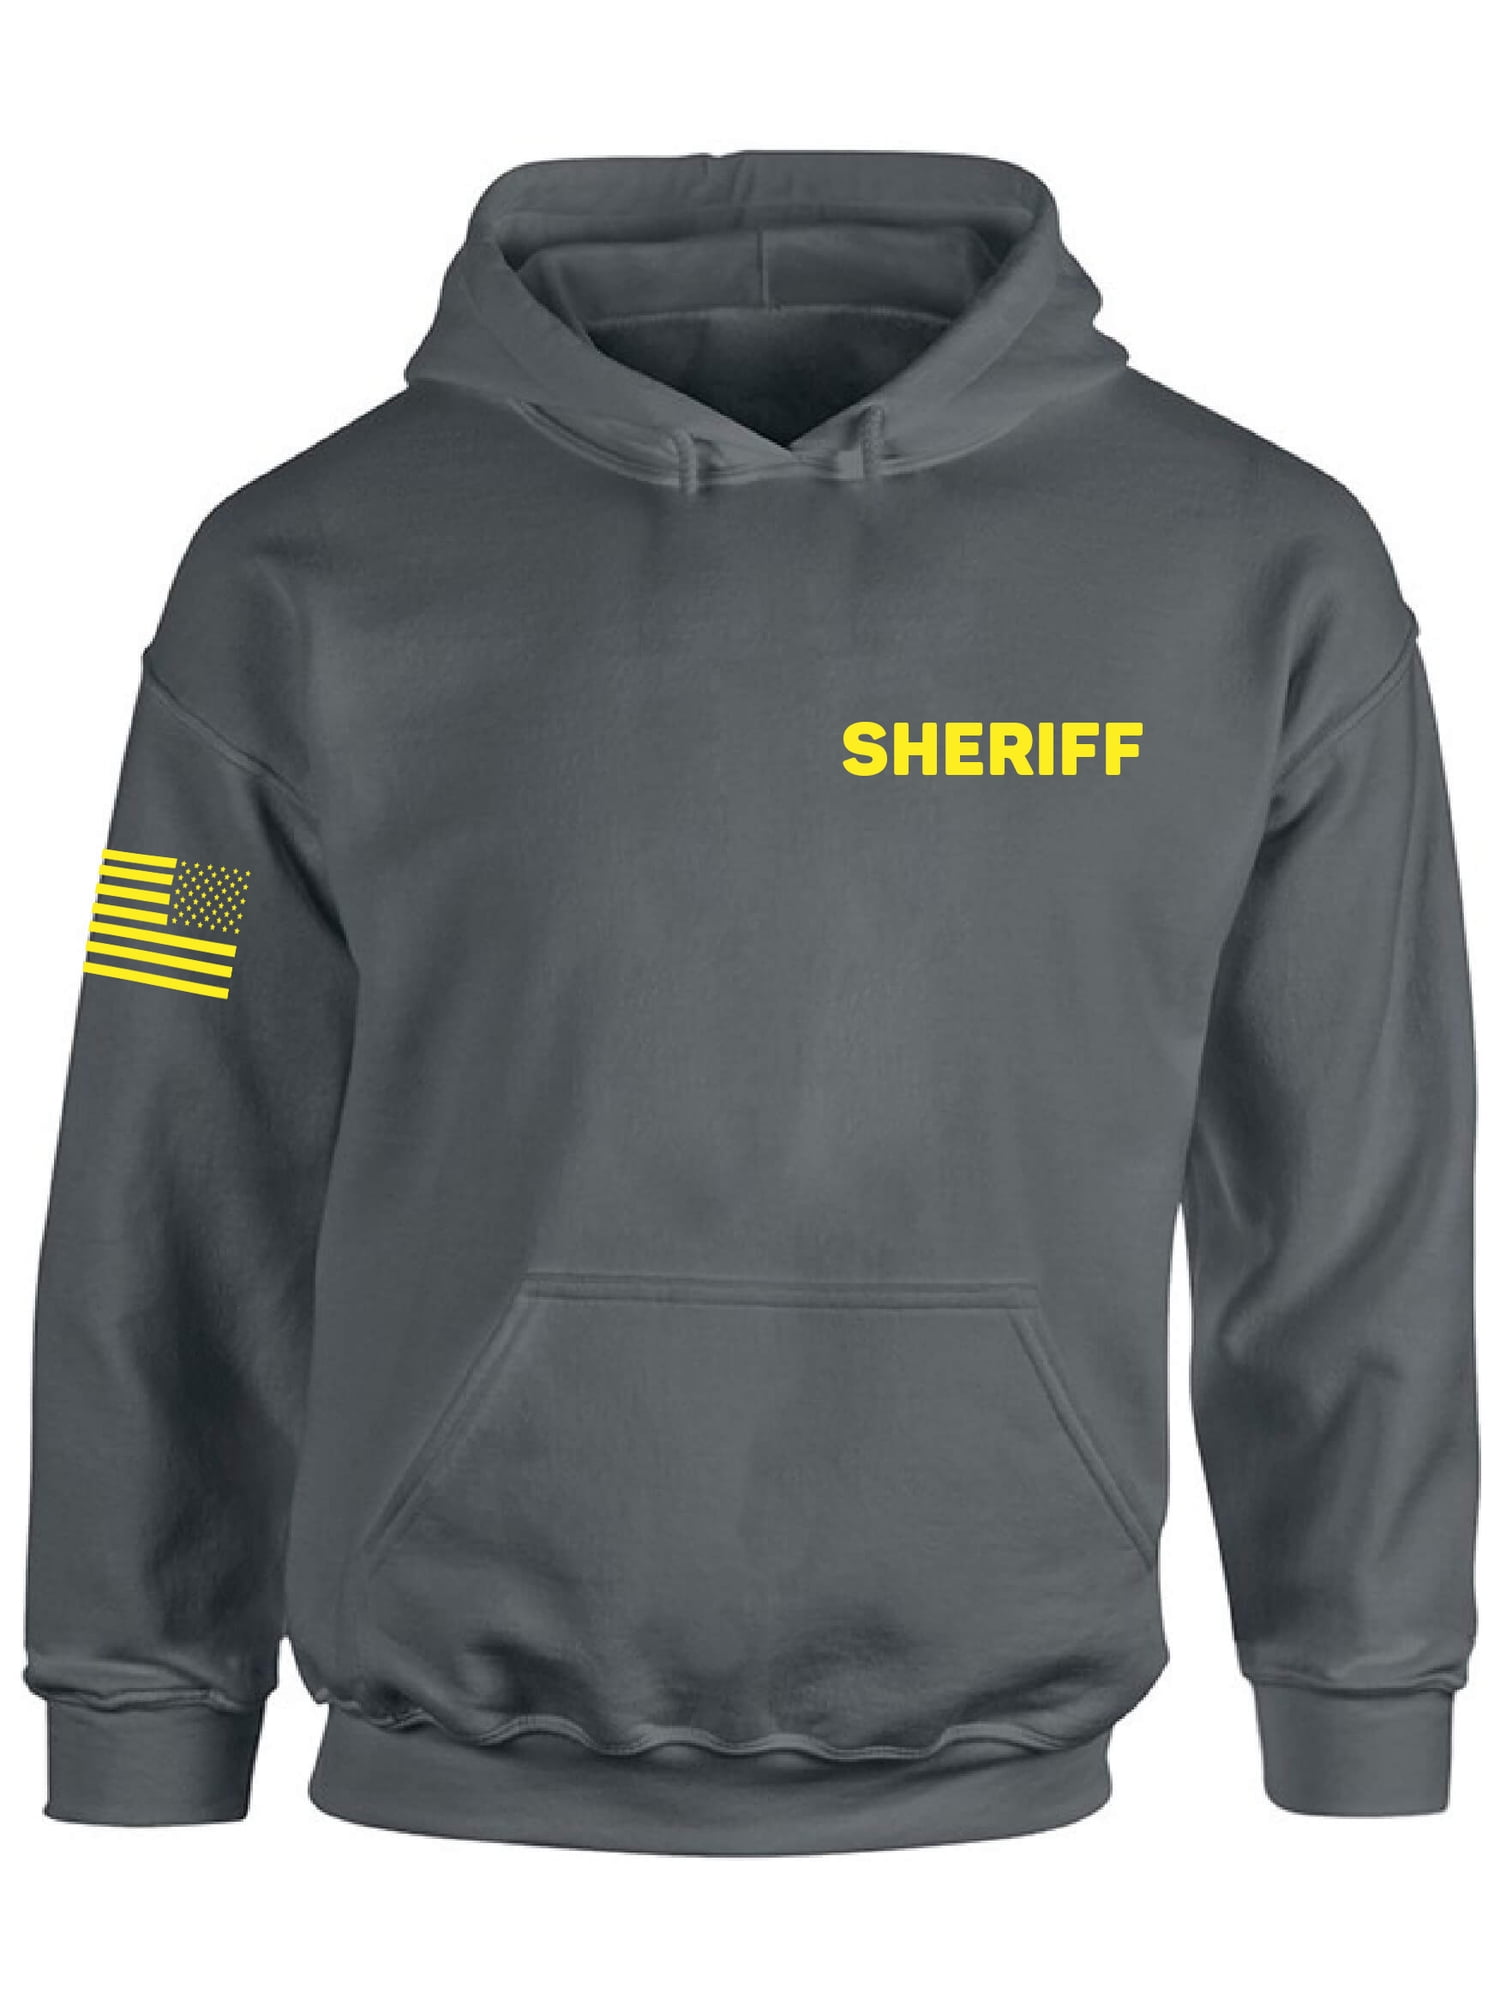 Warm Unisex Pullover Duty Hoodie cops sheriff swat emergency POLICE 